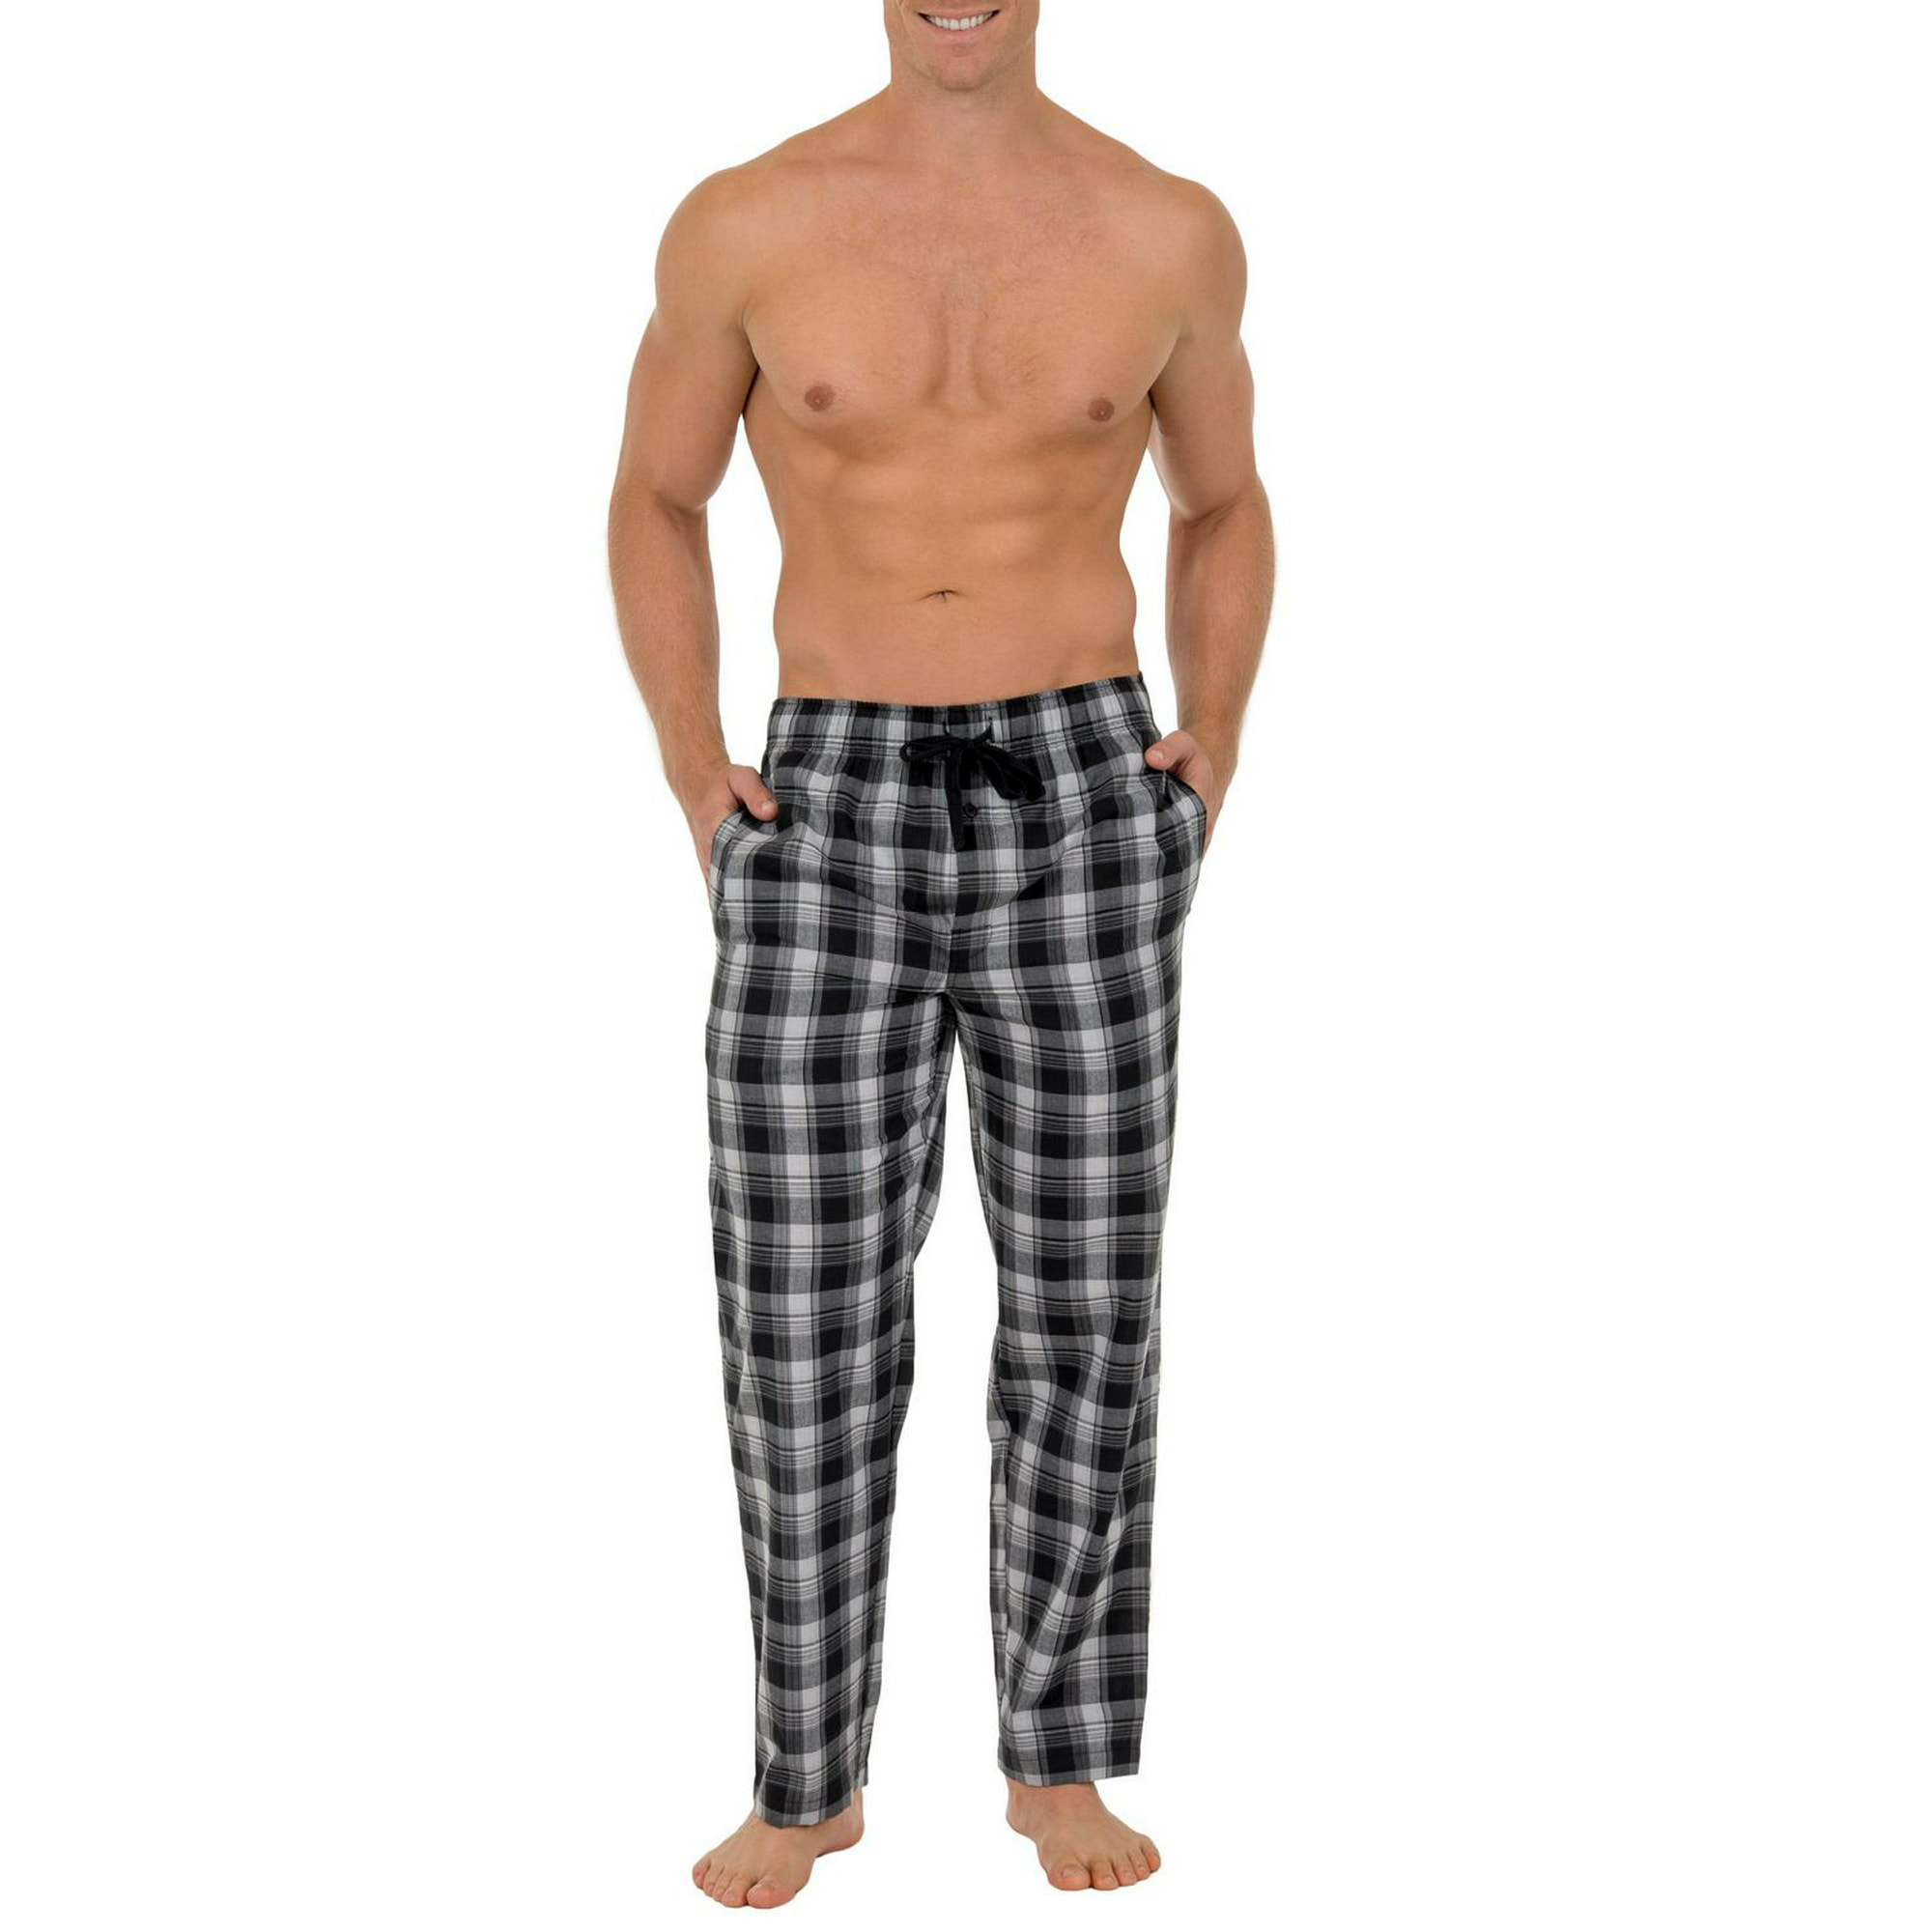 Mens Black and White Plaid Pajama Pants